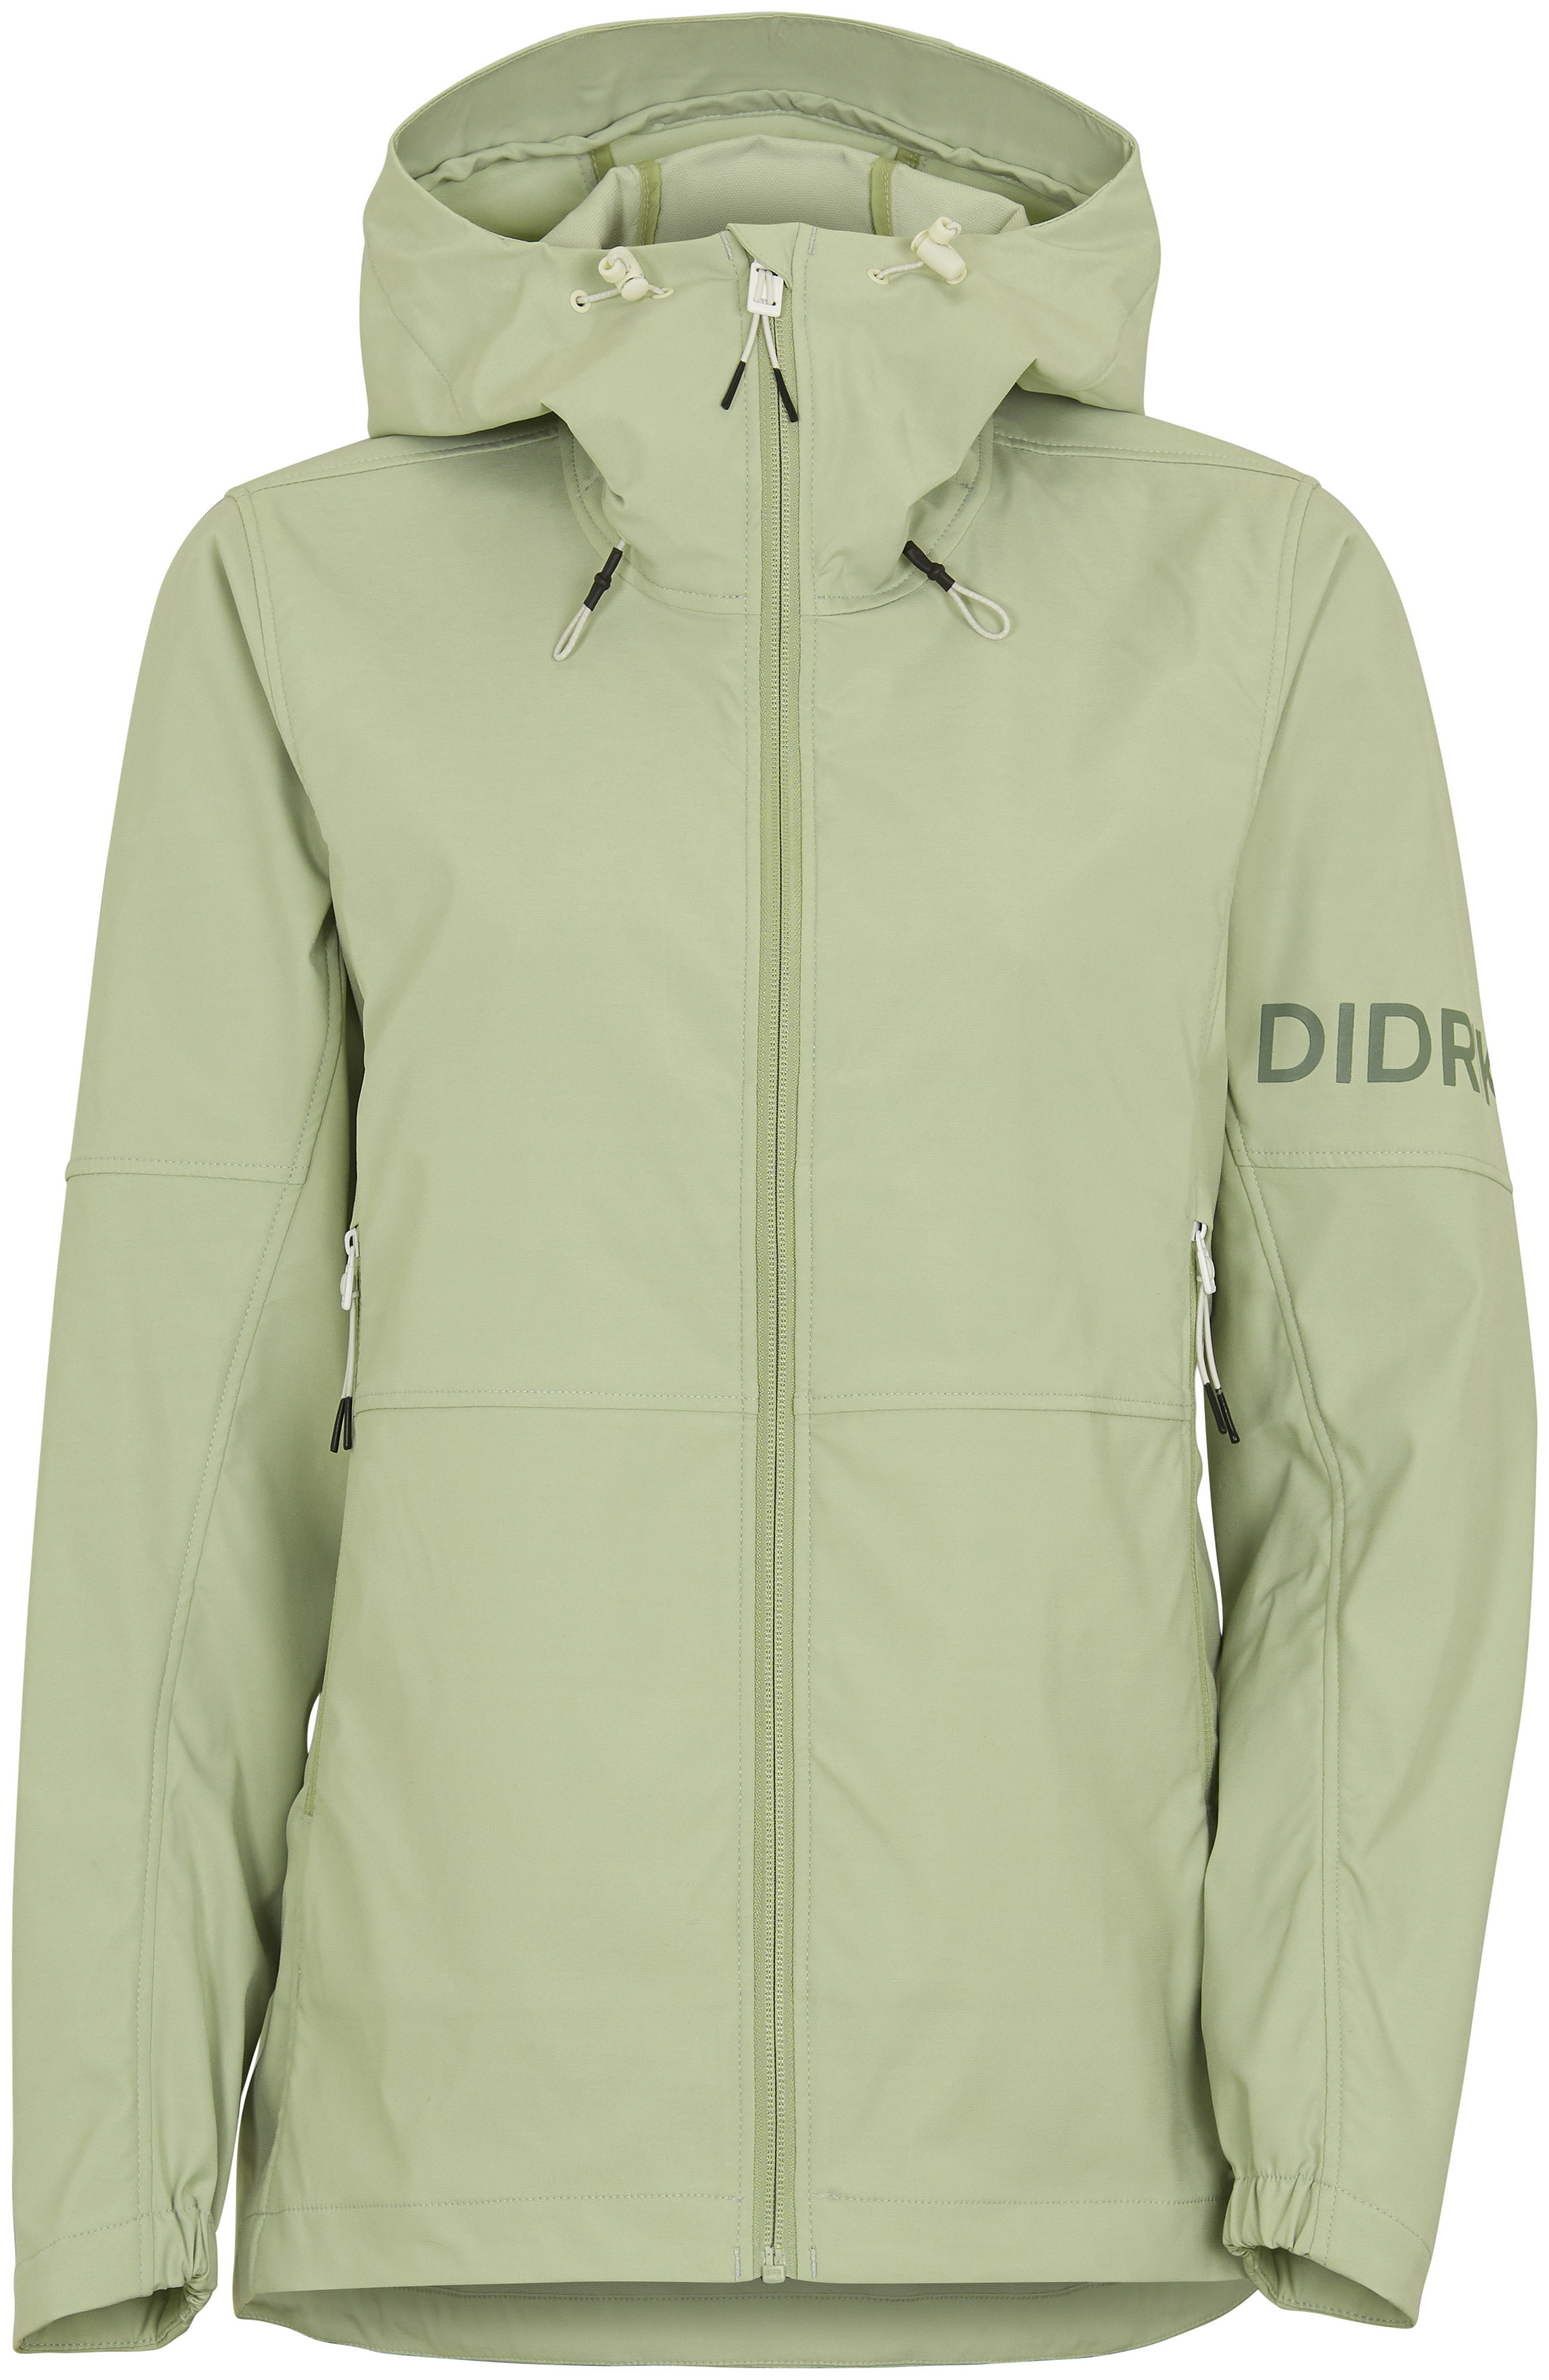 Didriksons Petra Women’s Jacket Soft Green